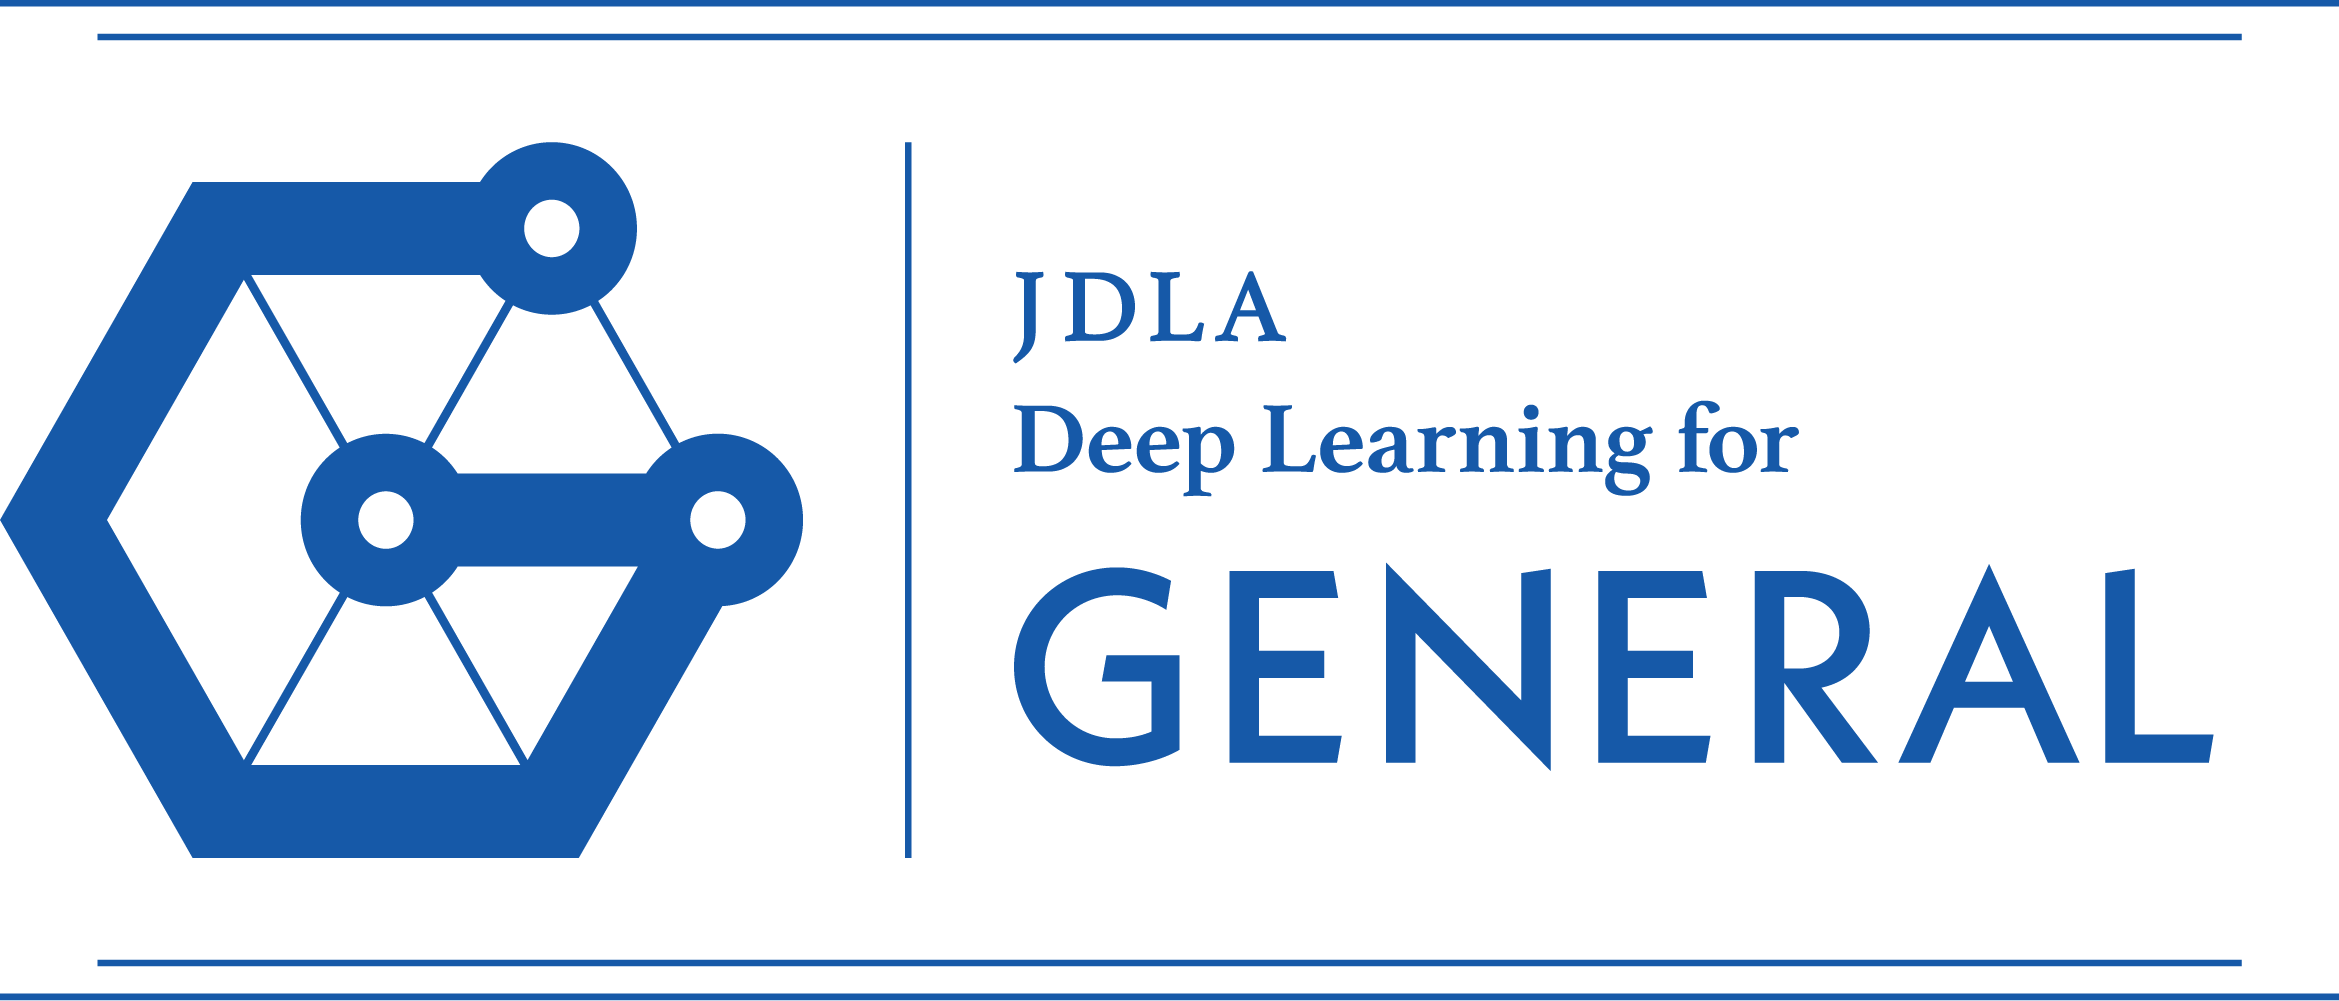 DX時代、デジタルリテラシーの整備が急務に。JDLAは資格試験・講座の